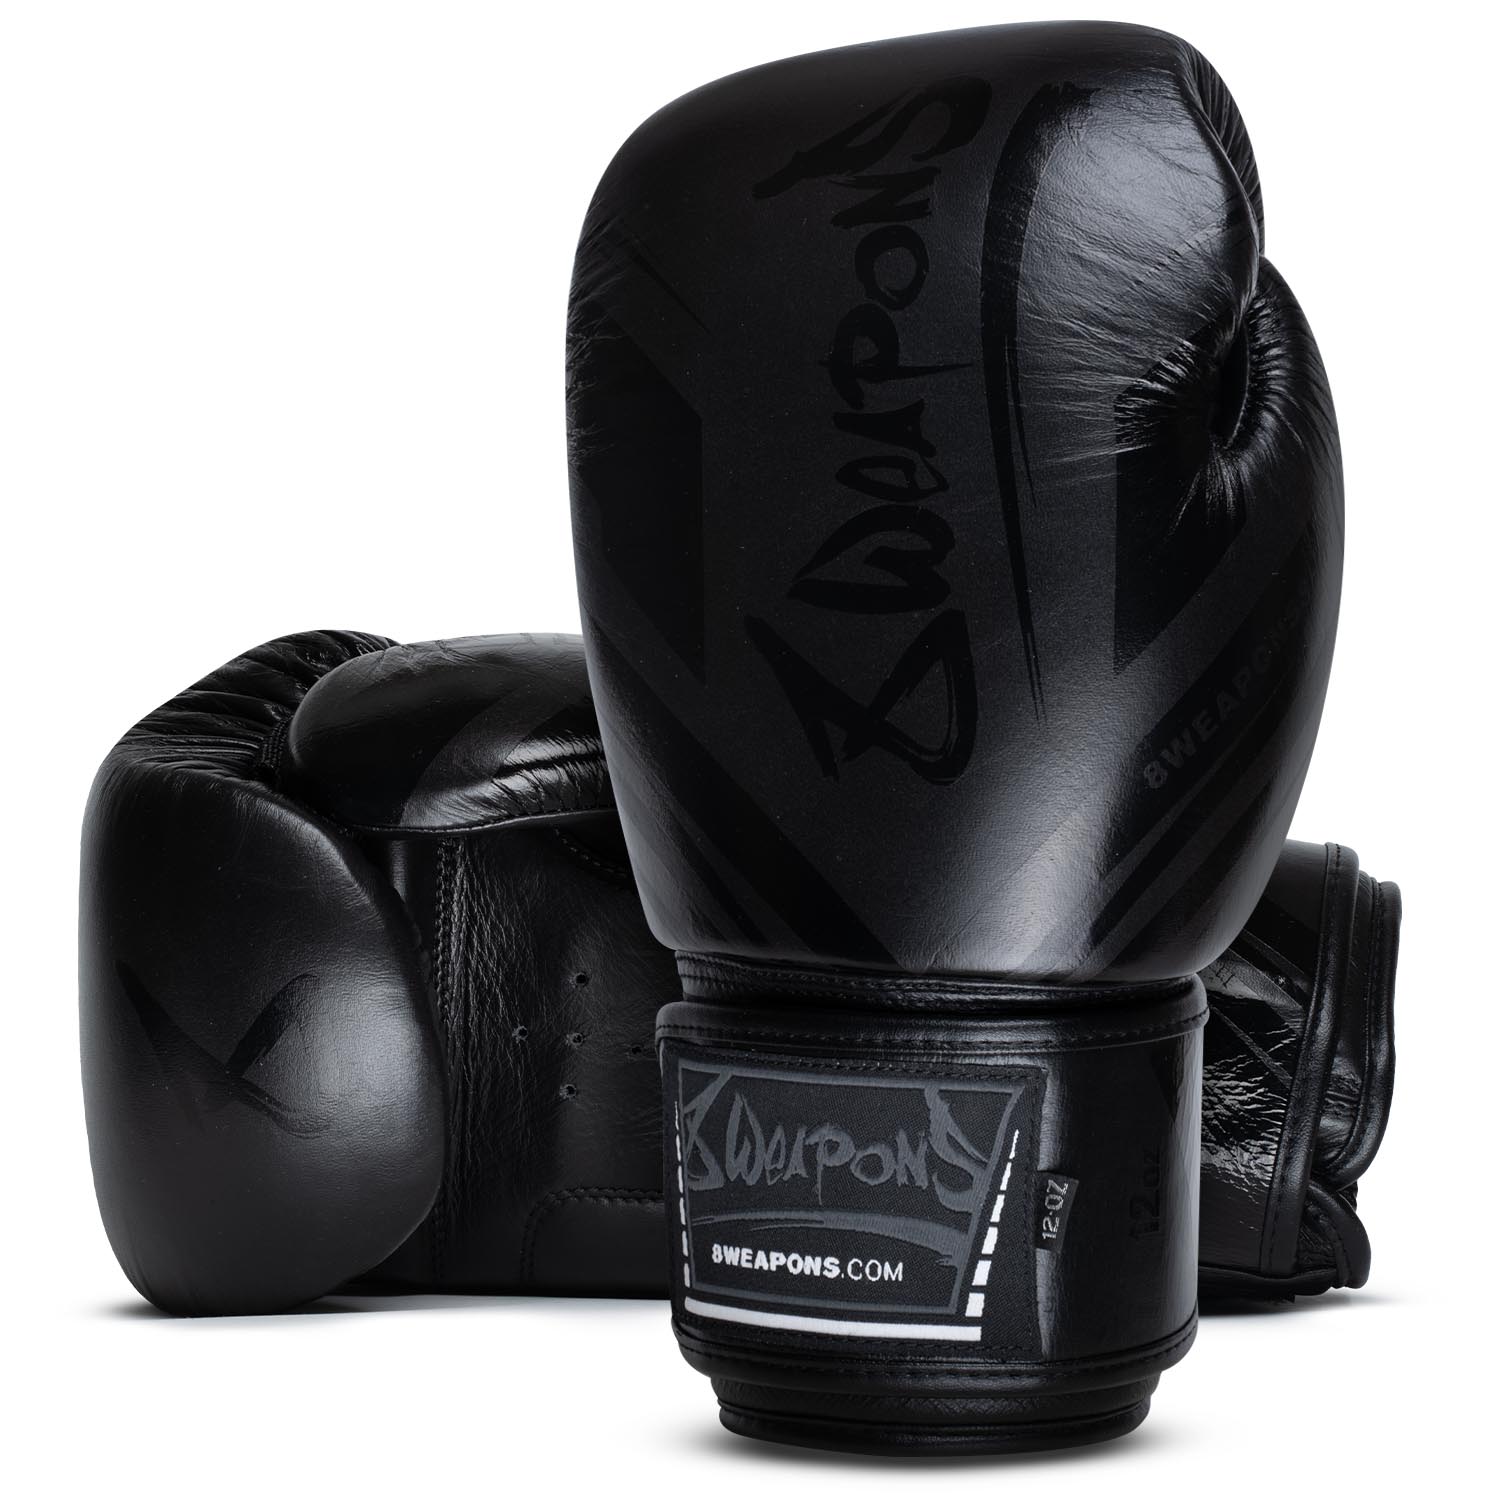 8 WEAPONS Boxing Gloves, Shift, black-matt